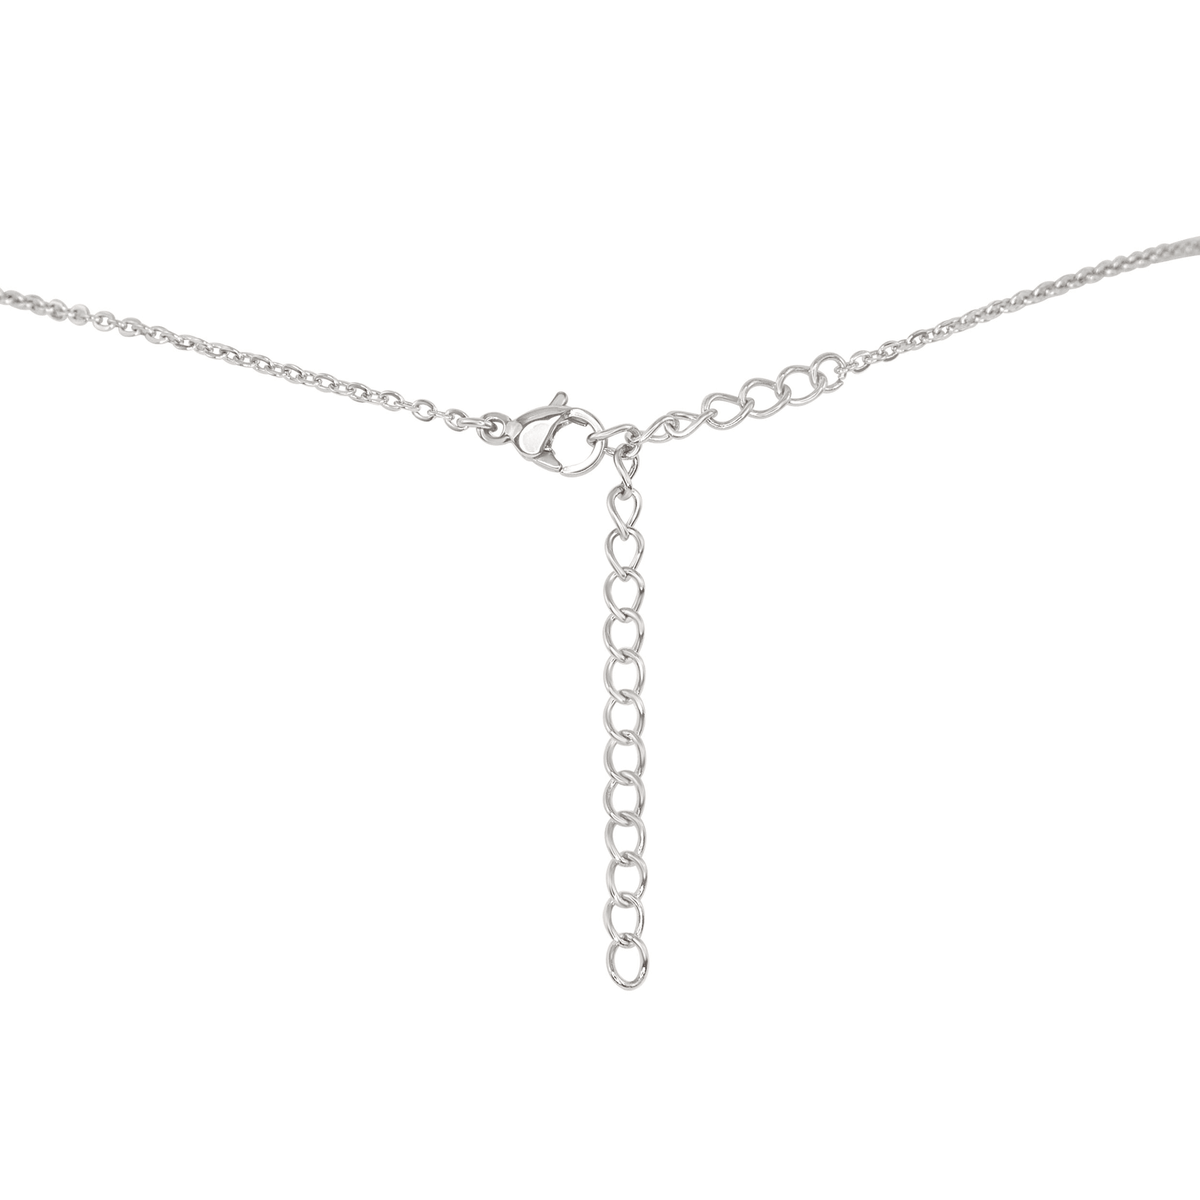 Tiny Raw Aquamarine Pendant Necklace - Tiny Raw Aquamarine Pendant Necklace - Sterling Silver / Cable - Luna Tide Handmade Crystal Jewellery